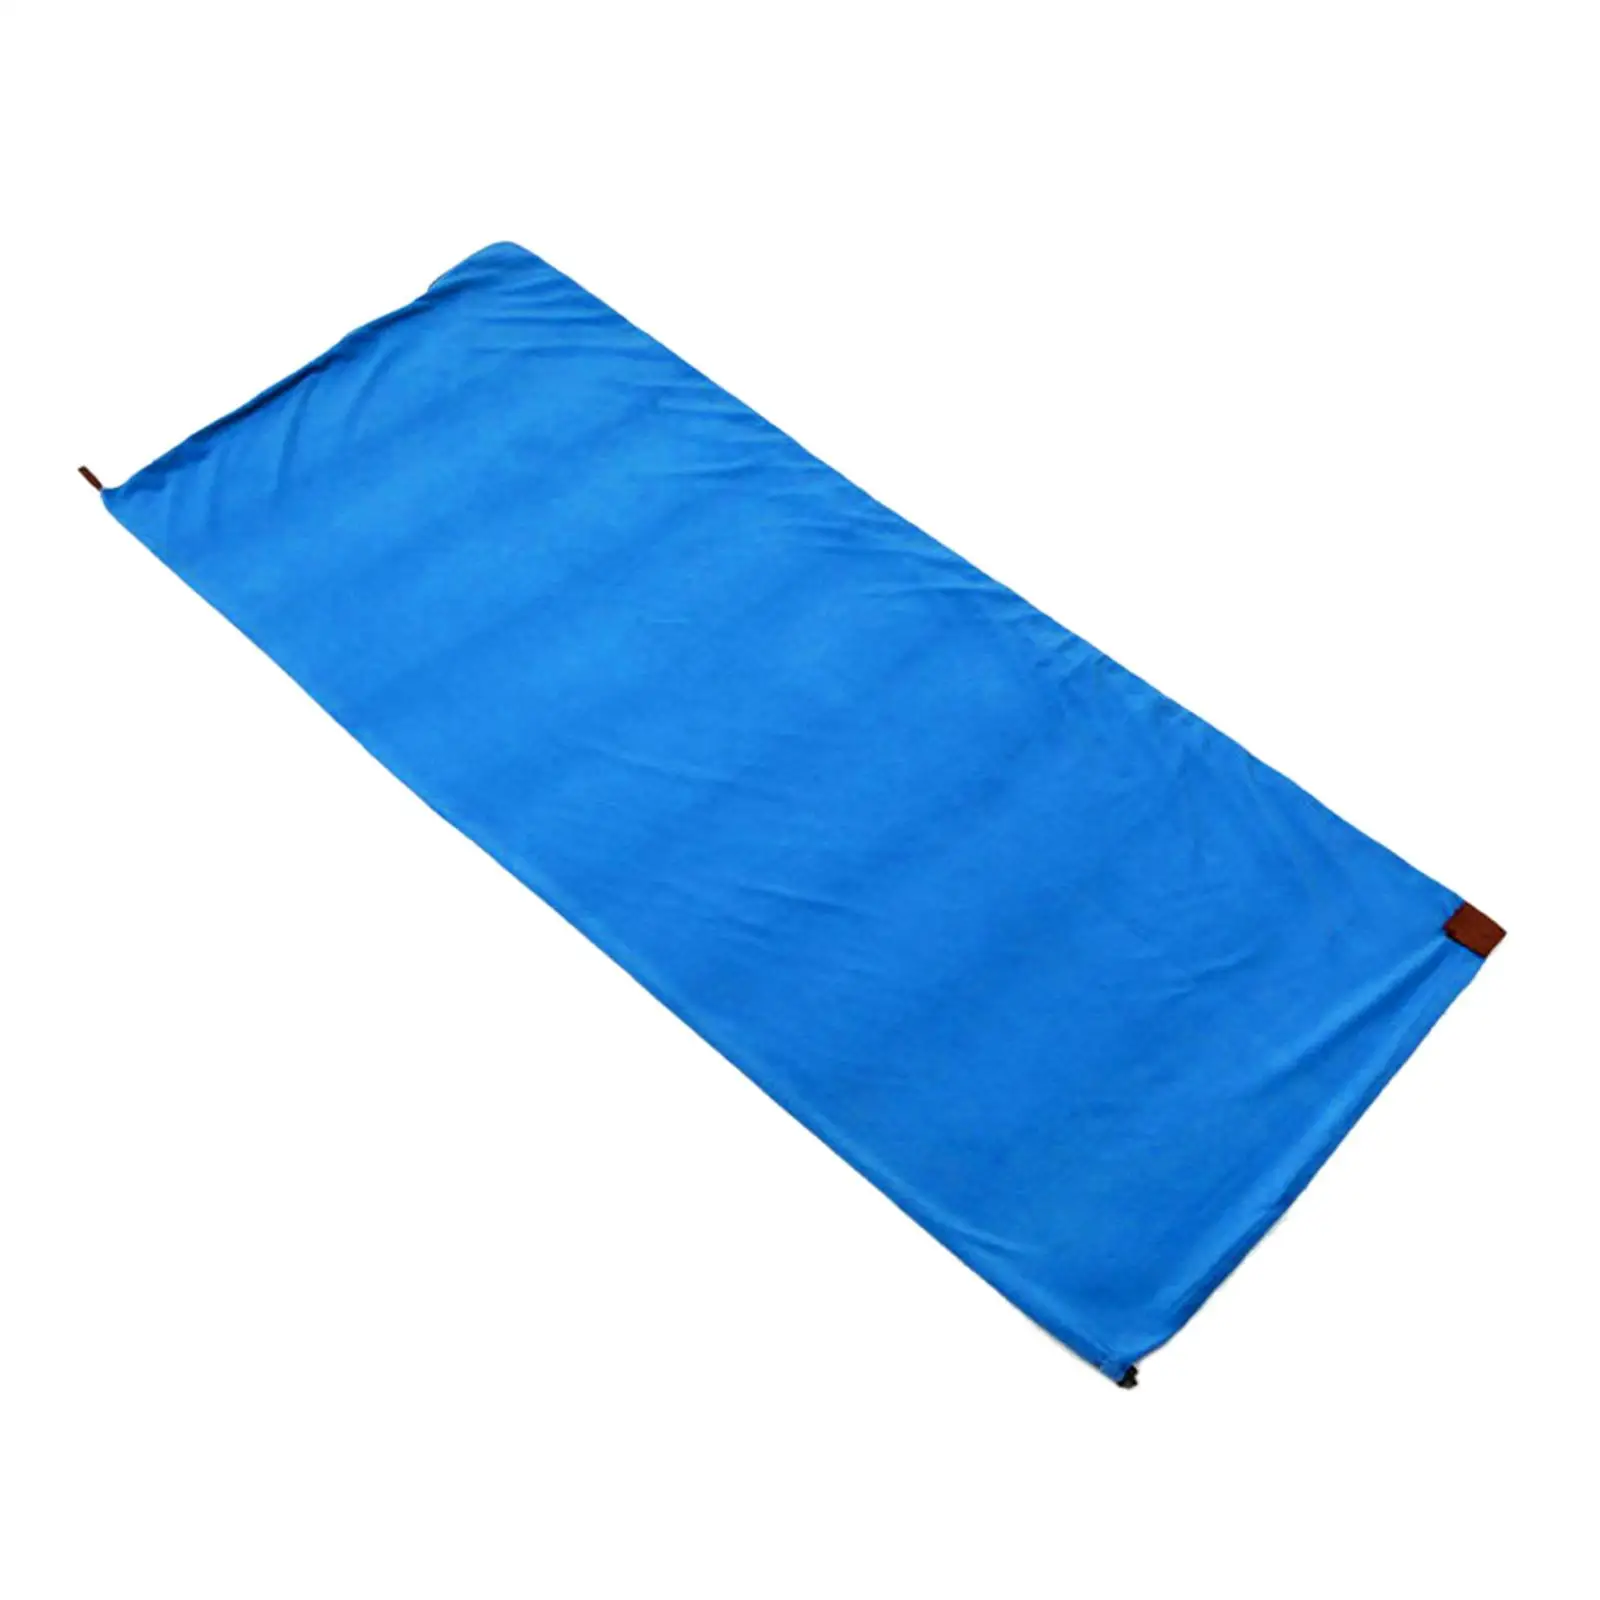 Soft Fleece Sleeping Bag Liner Outdoor Camping Blanket for Cold Weather Adult Jogging